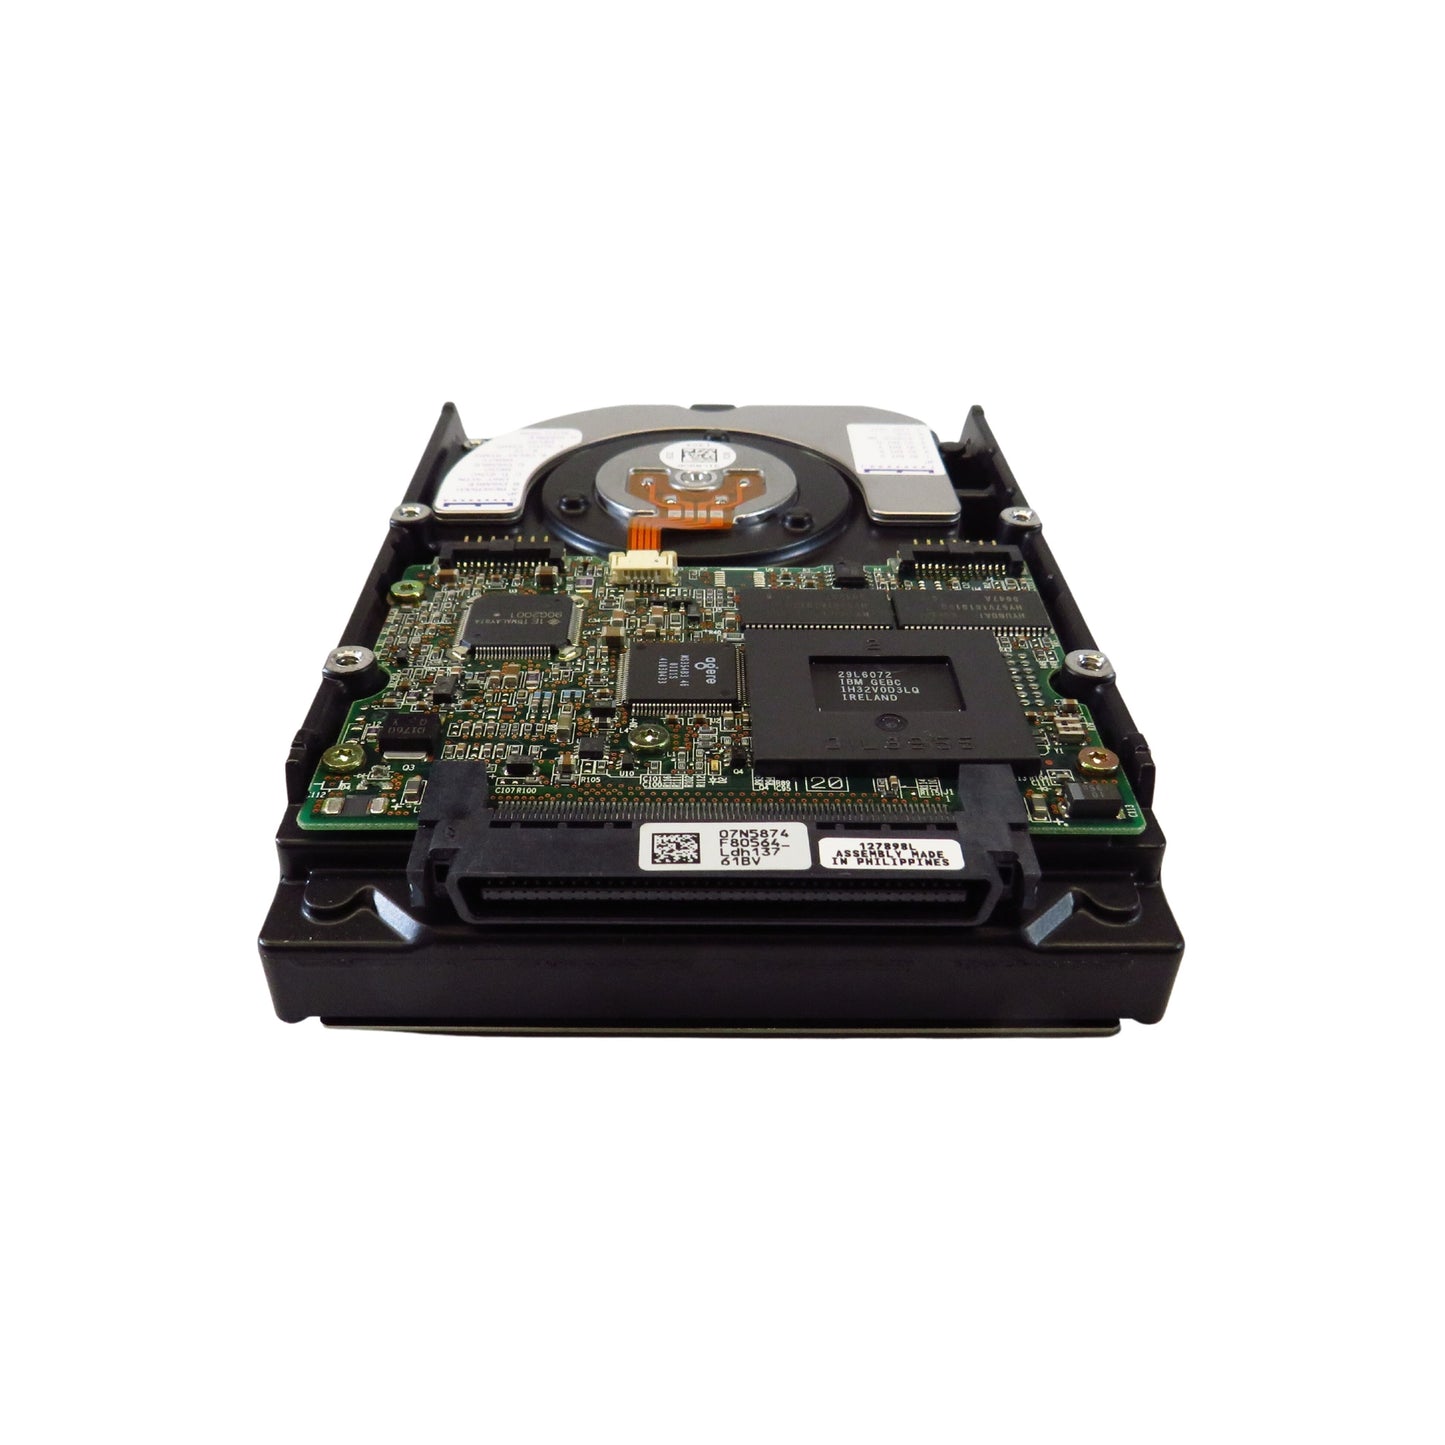 IBM 07N3195 9GB 10K RPM 3.5" Ultra3 SCSI 80P HDD Hard Drive (Refurbished)